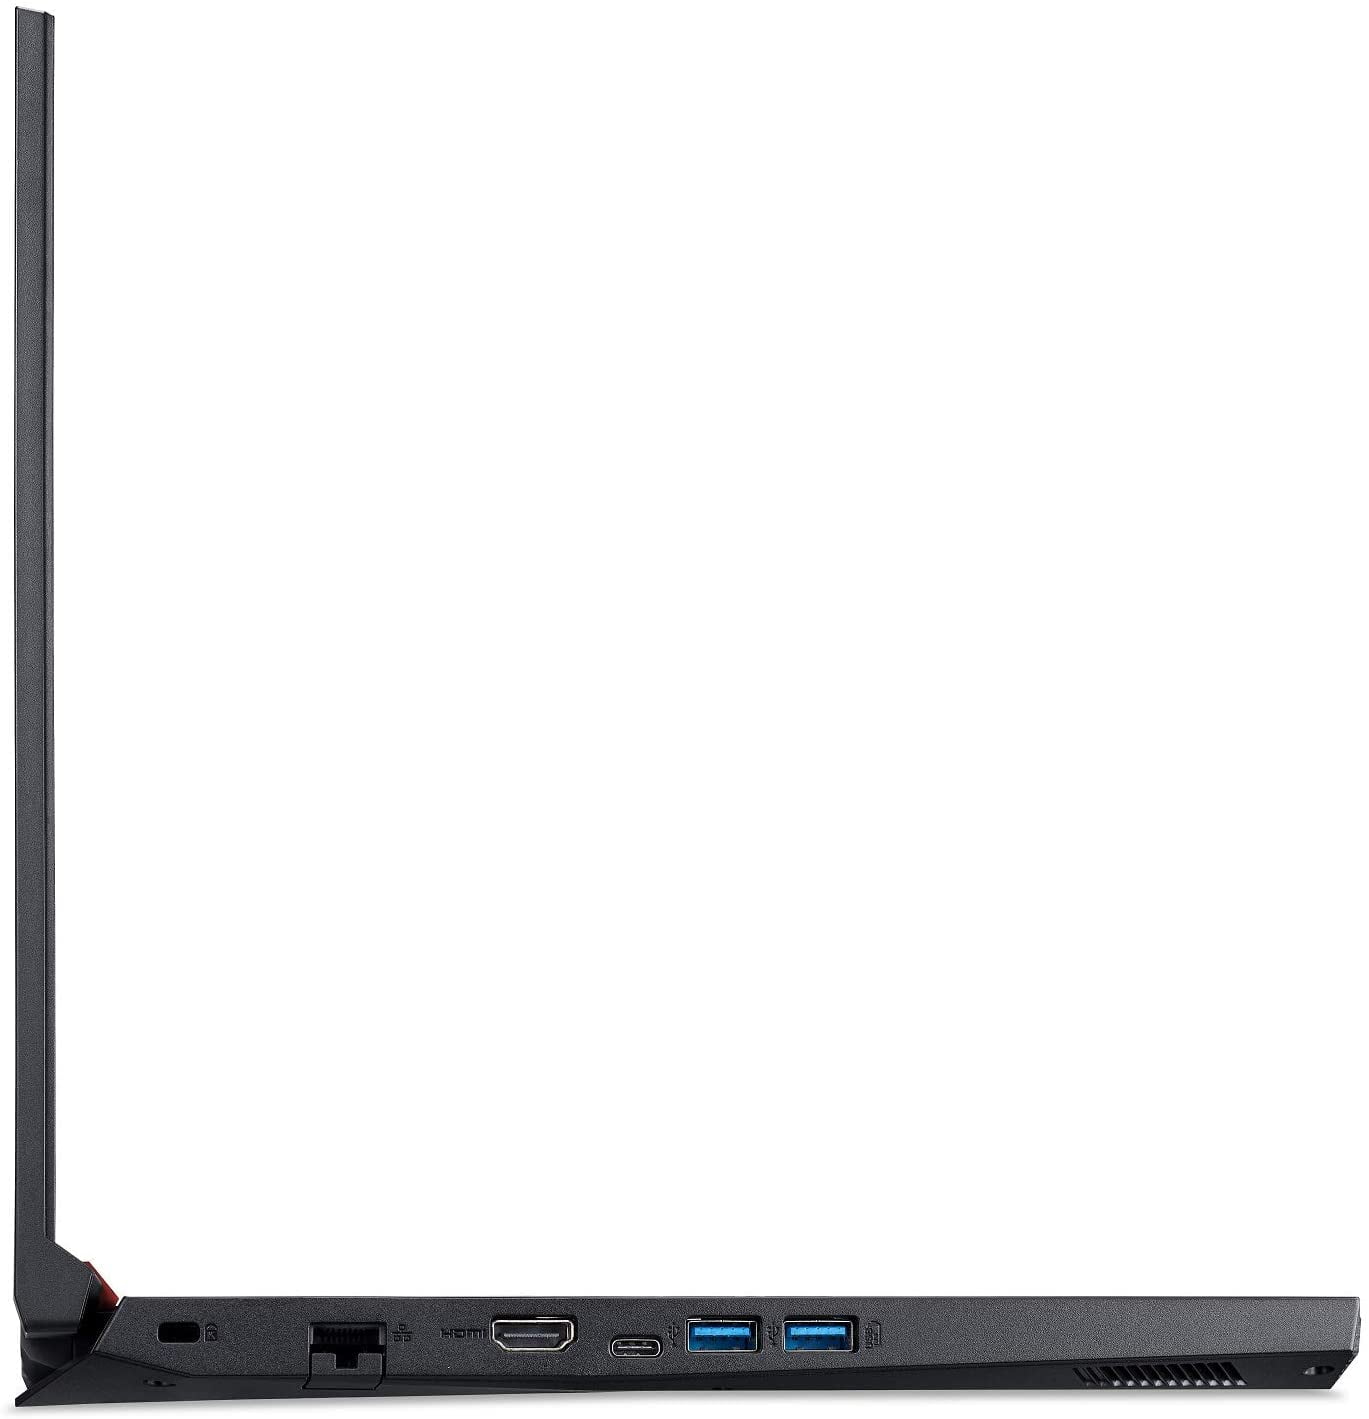  Acer Nitro 5 Gaming Laptop, 9th Gen Intel Core i5-9300H, NVIDIA  GeForce GTX 1650, 15.6 Full HD IPS Display, 8GB DDR4, 256GB NVMe SSD,  Wi-Fi 6, Backlit Keyboard, Alexa Built-in, AN515-54-5812 